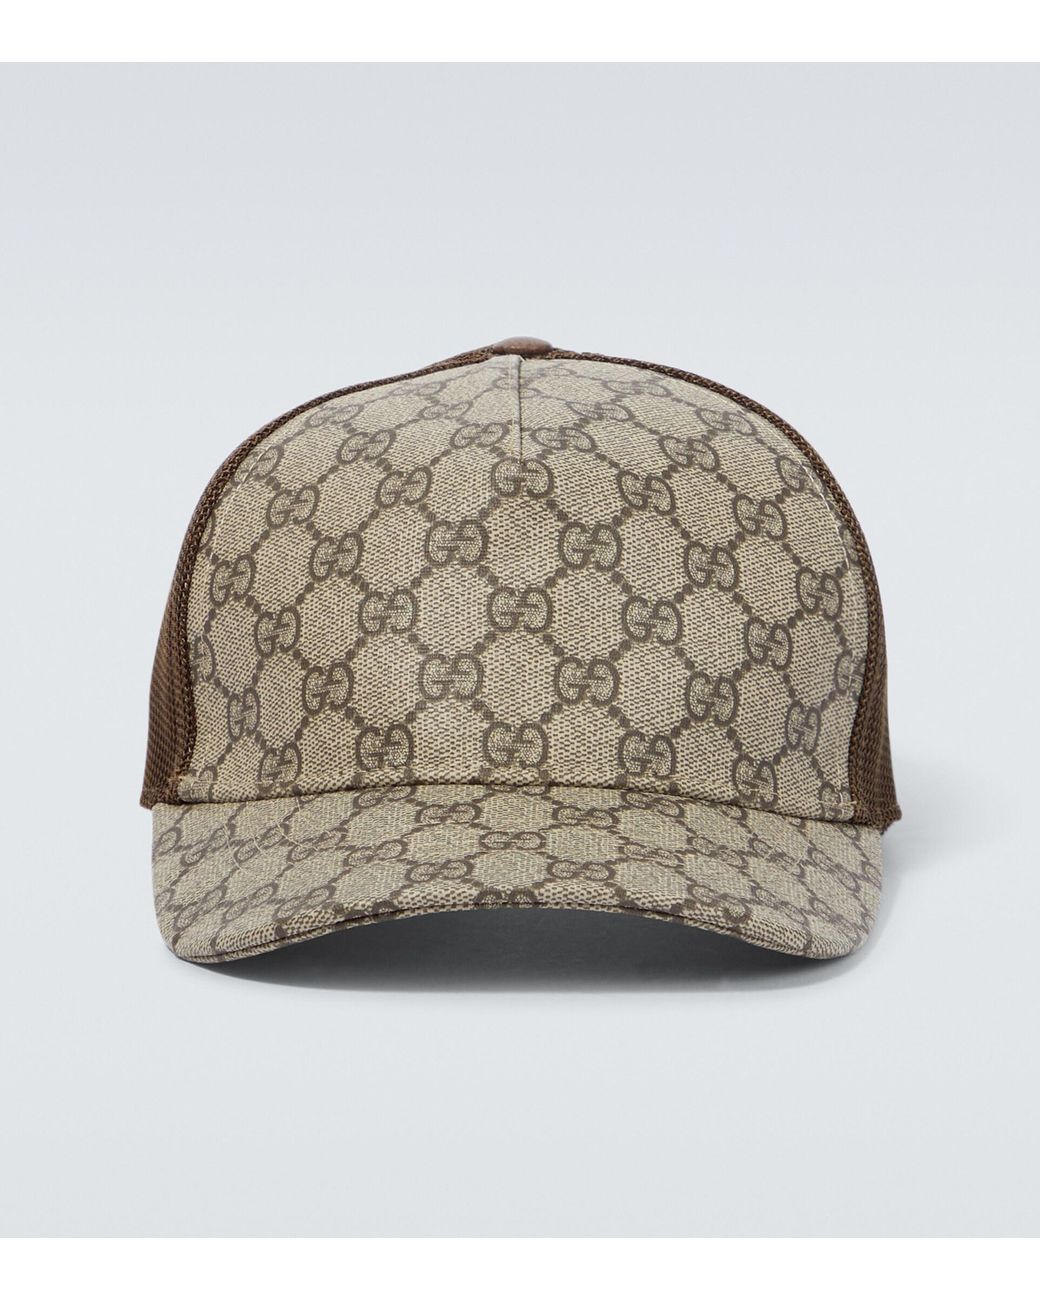 Gucci Men, GG Maxi baseball cap, Black, Patterned, M, Hats, Leather